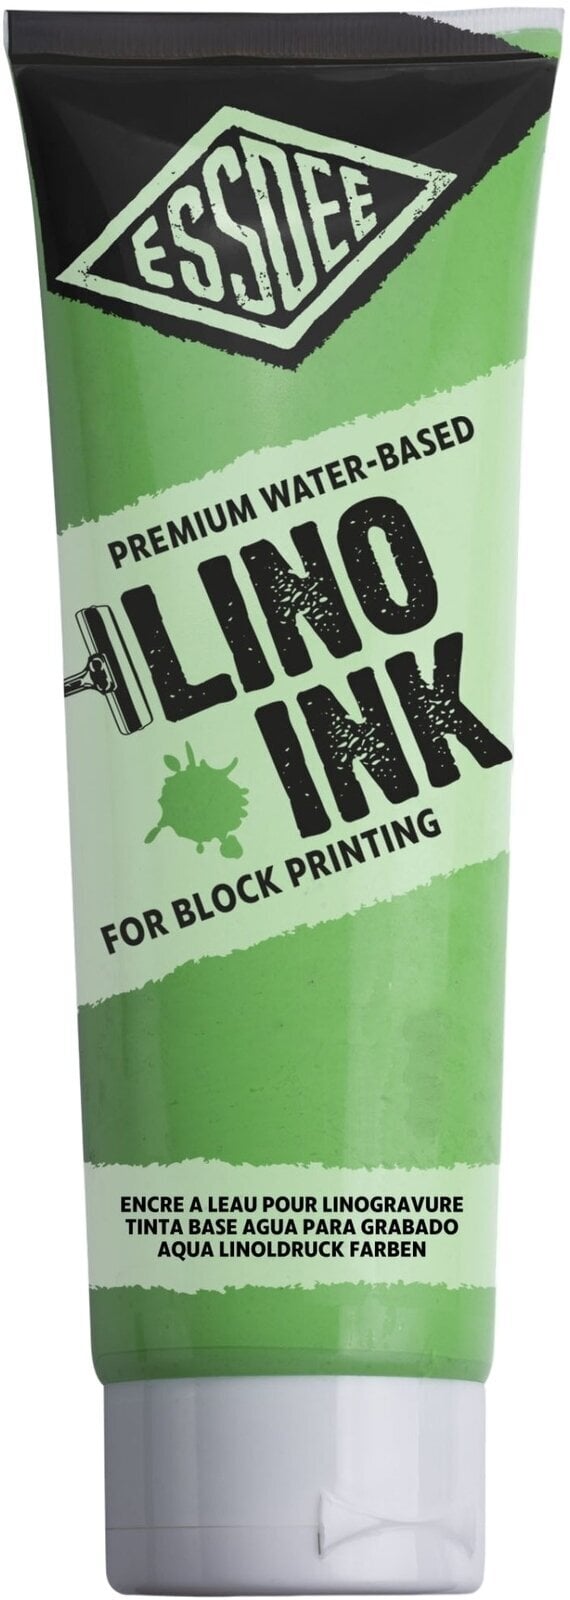 Farbe für Linolschnitt Essdee Block Printing Ink Farbe für Linolschnitt Fluorescent Green 300 ml